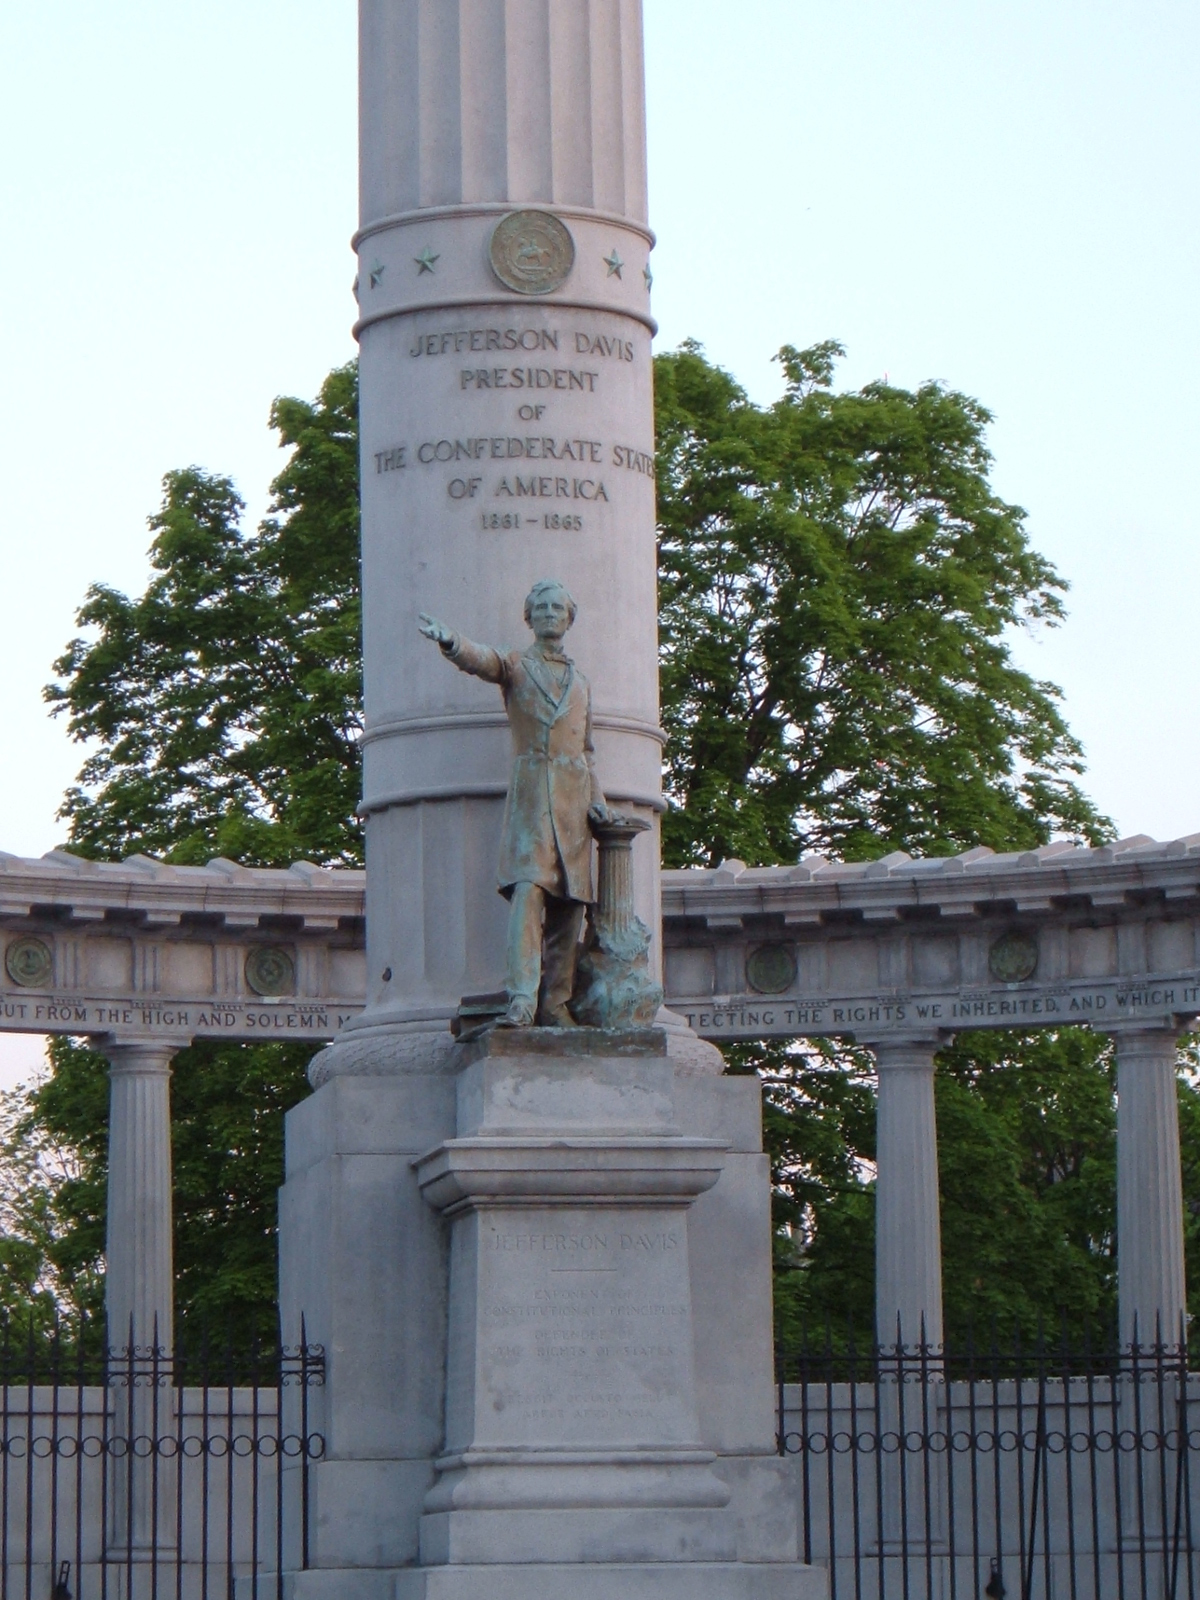 Detail of Jefferson Davis statue.